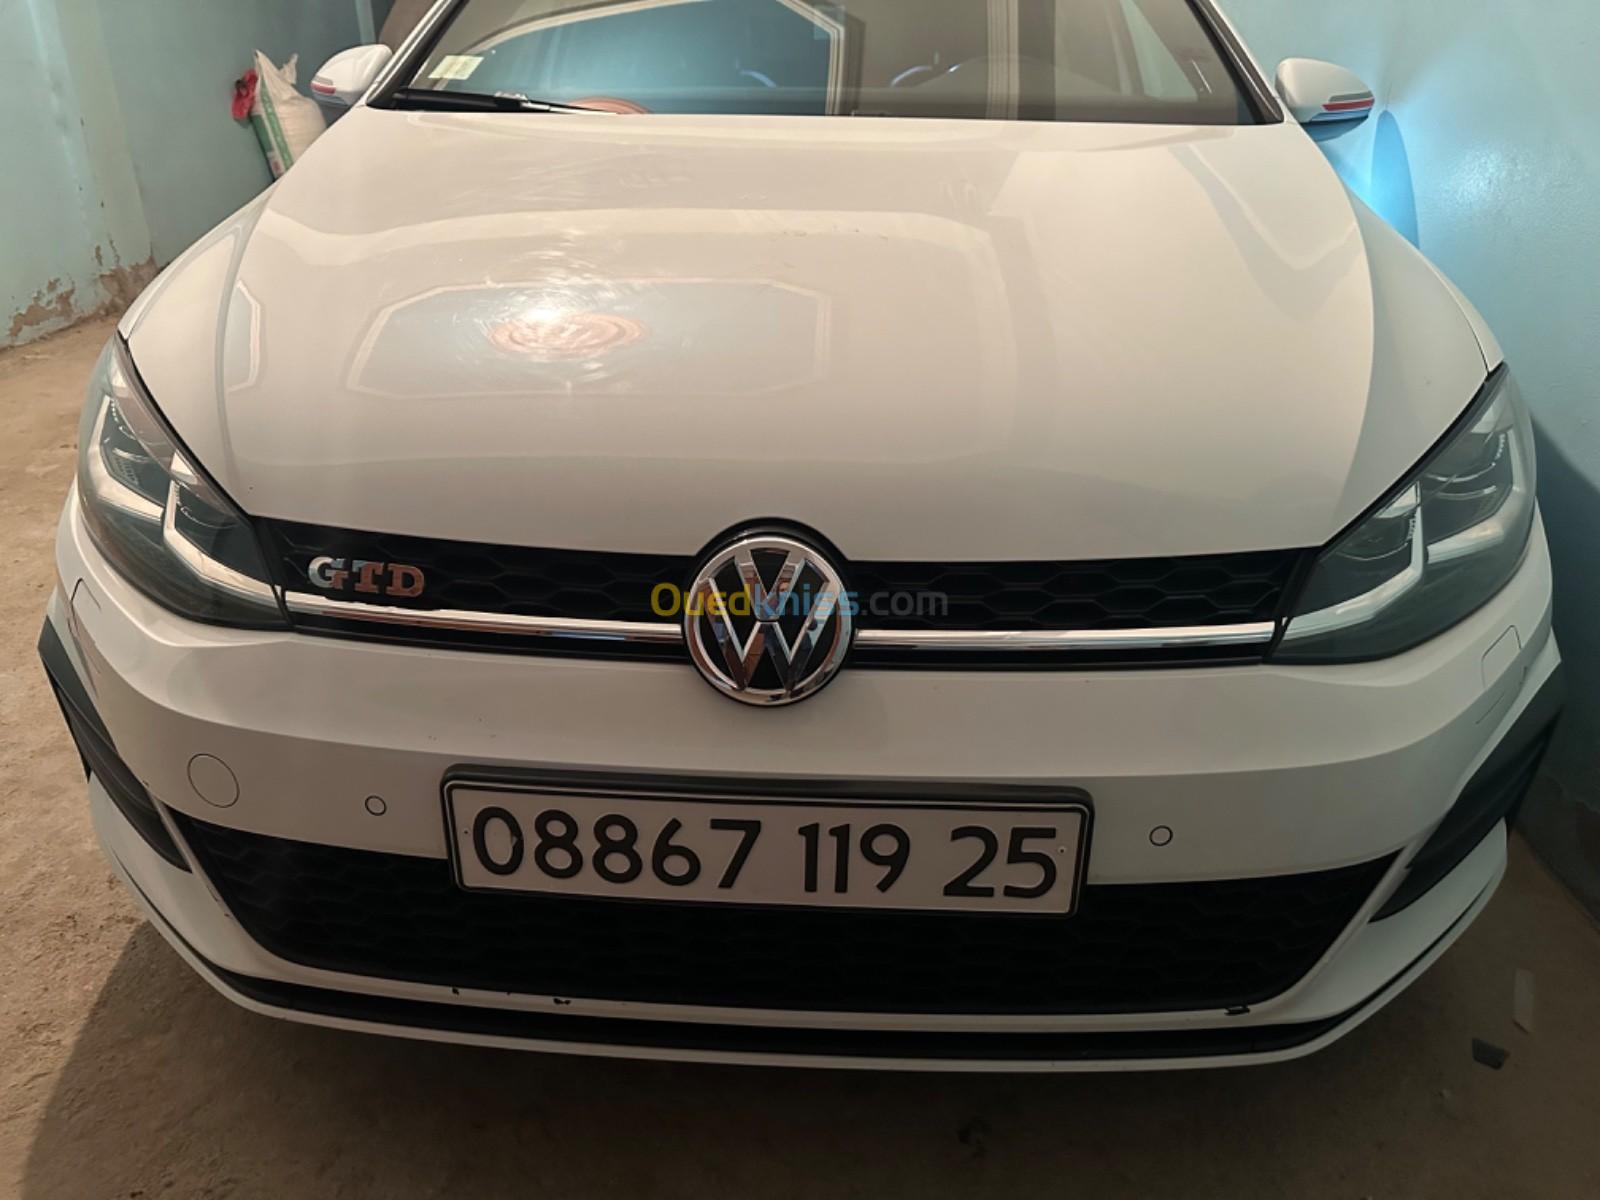 Volkswagen Golf 7 2019 GTD